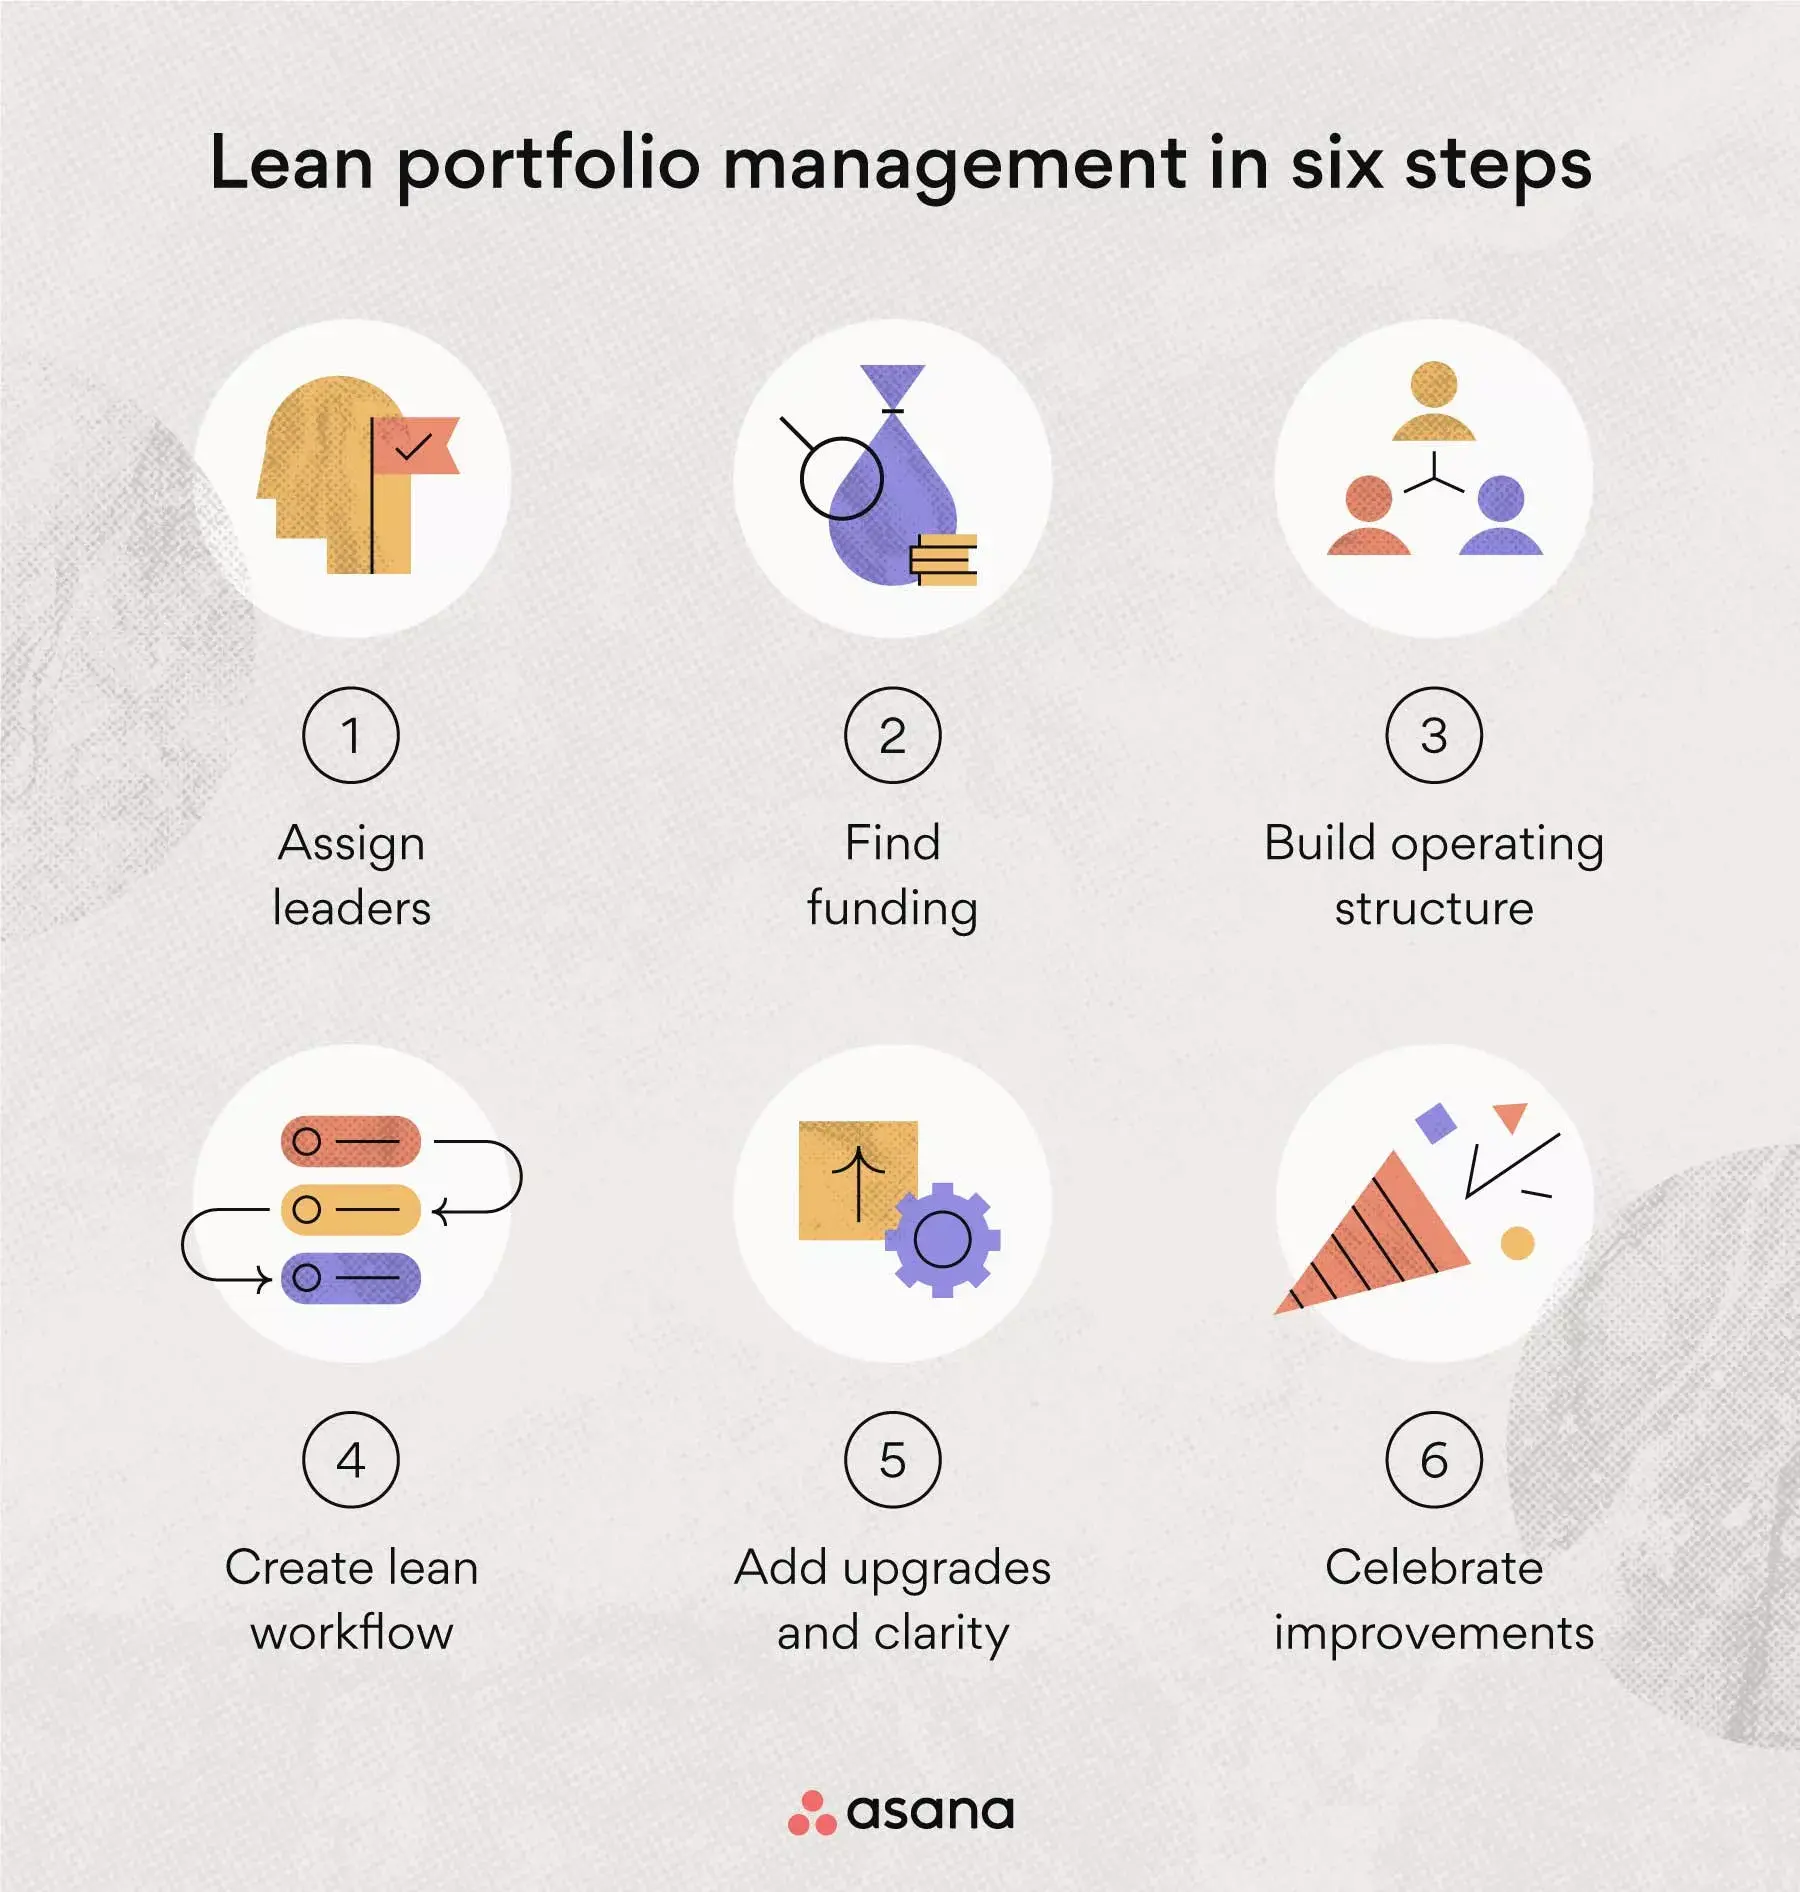 The six steps to lean portfolio management